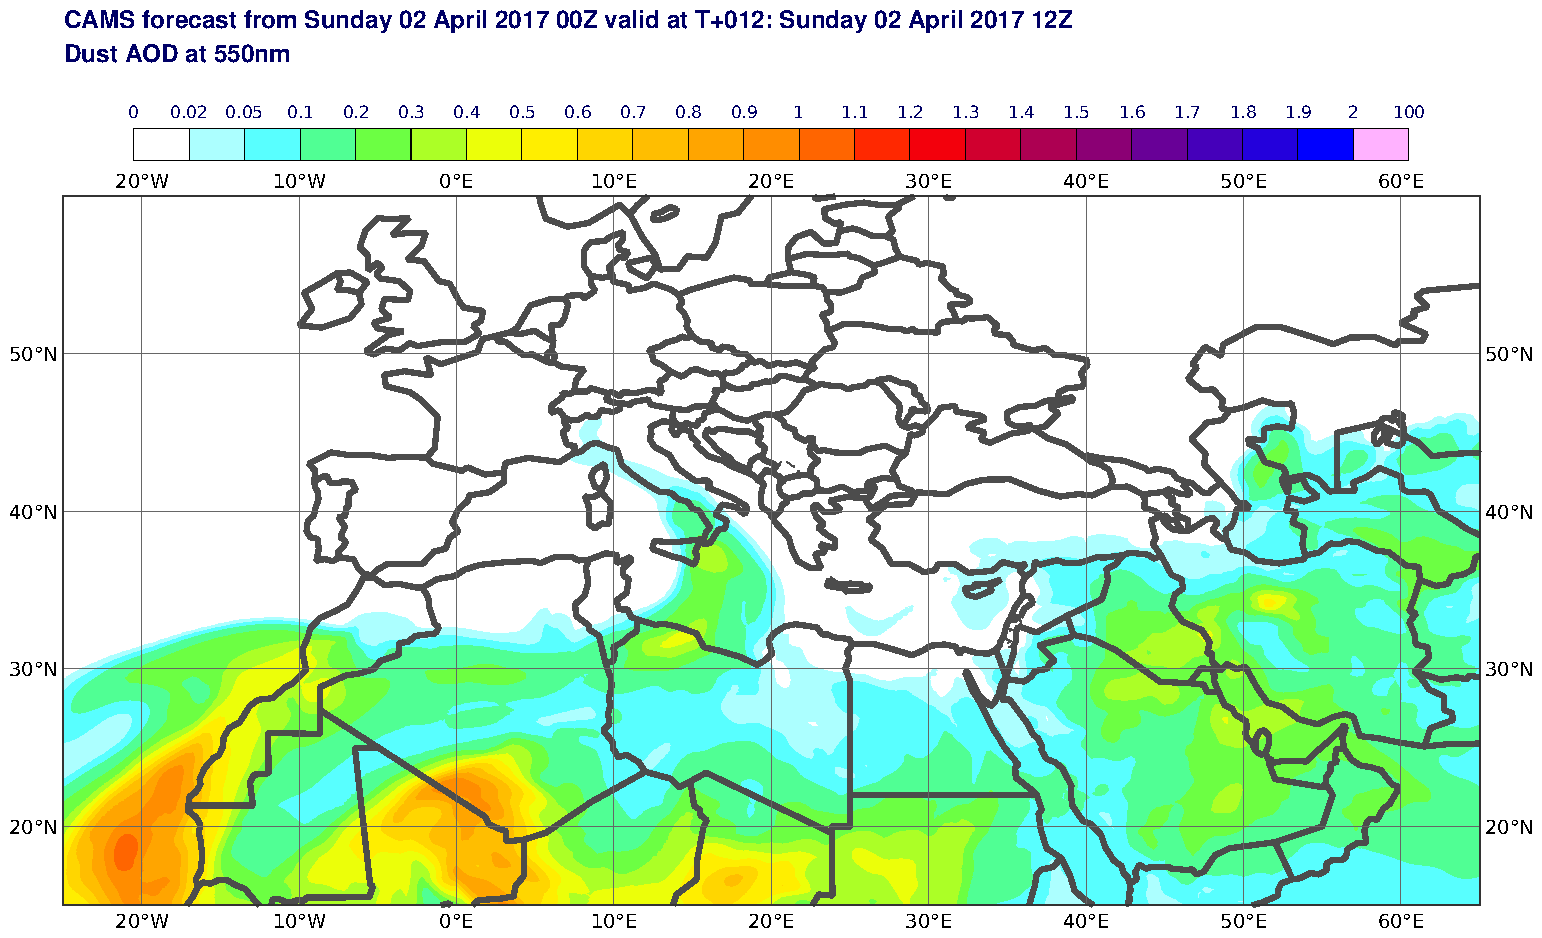 Dust AOD at 550nm valid at T12 - 2017-04-02 12:00